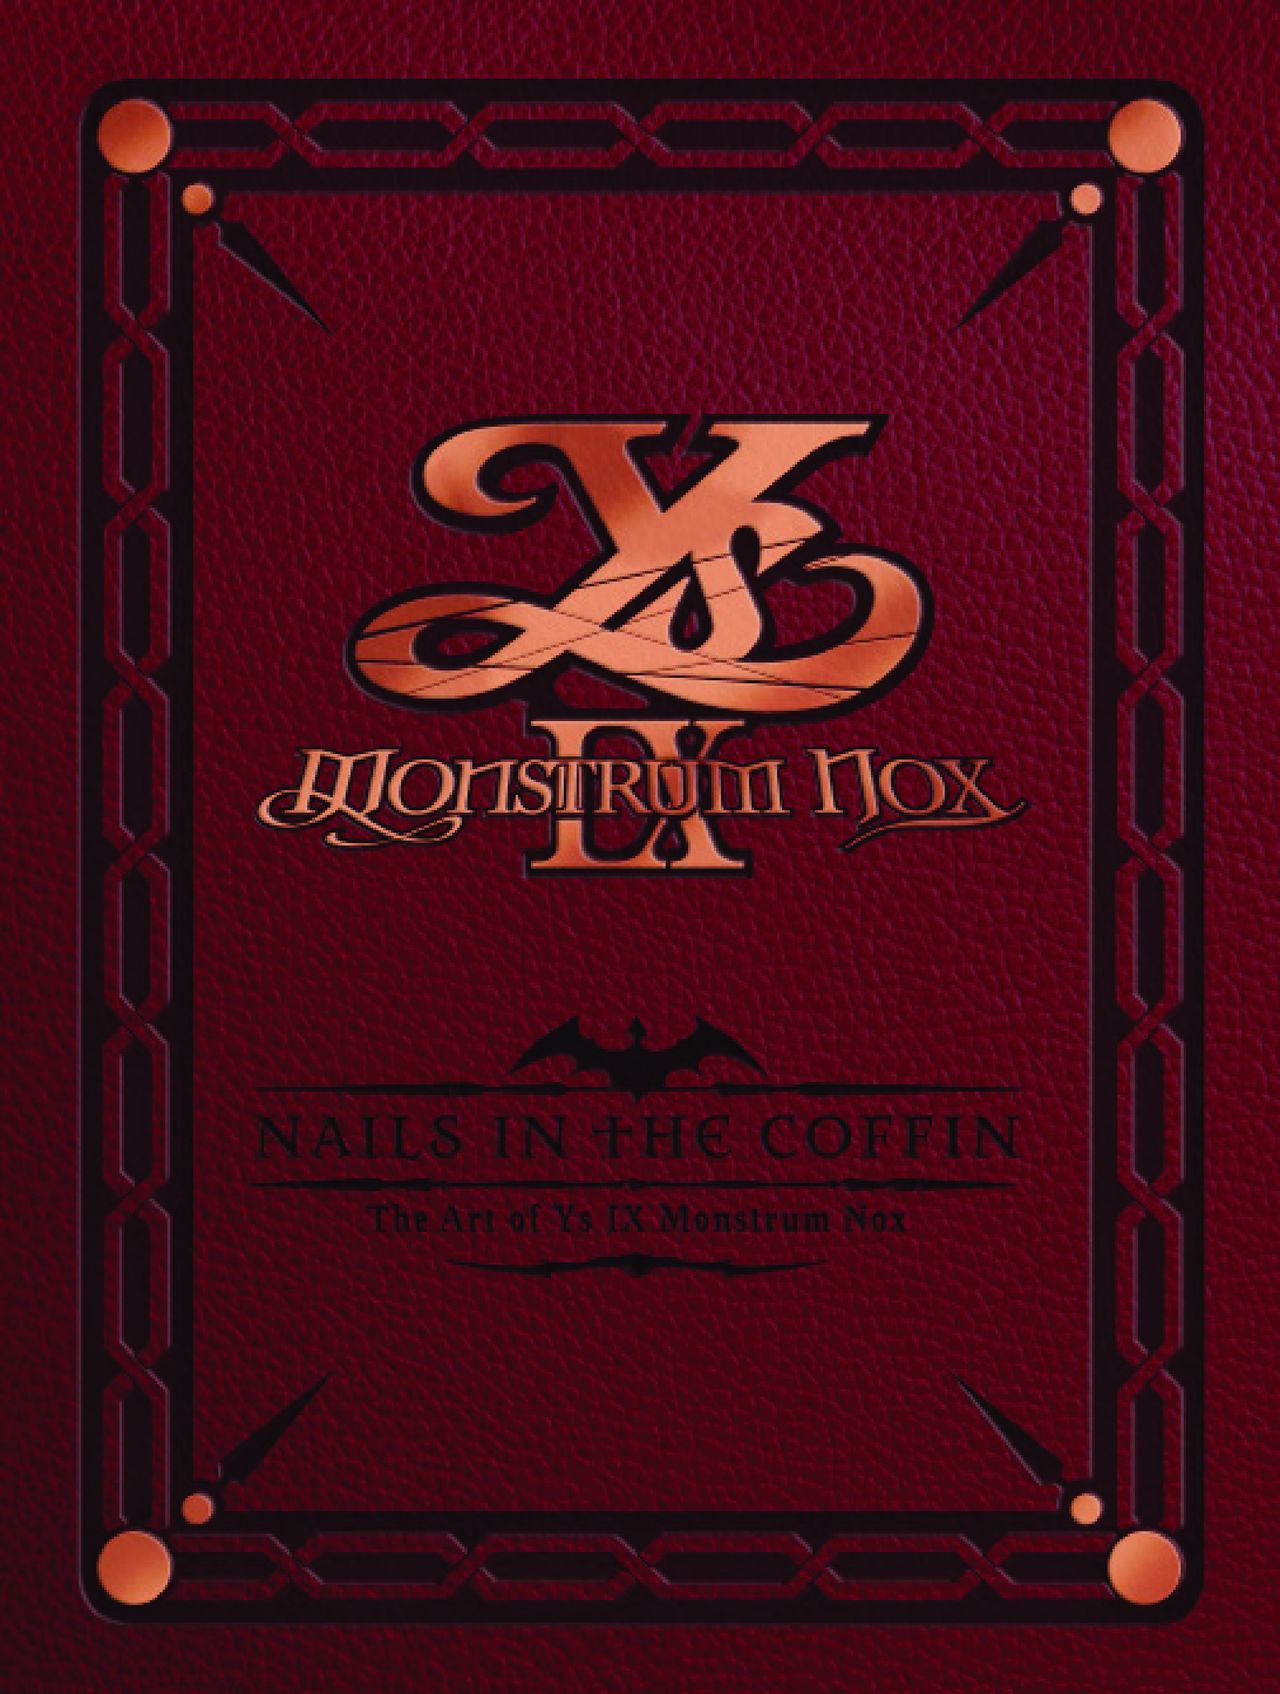 Ys IX Monstrum Nox - Nails in the Coffin Digital Art Book 1